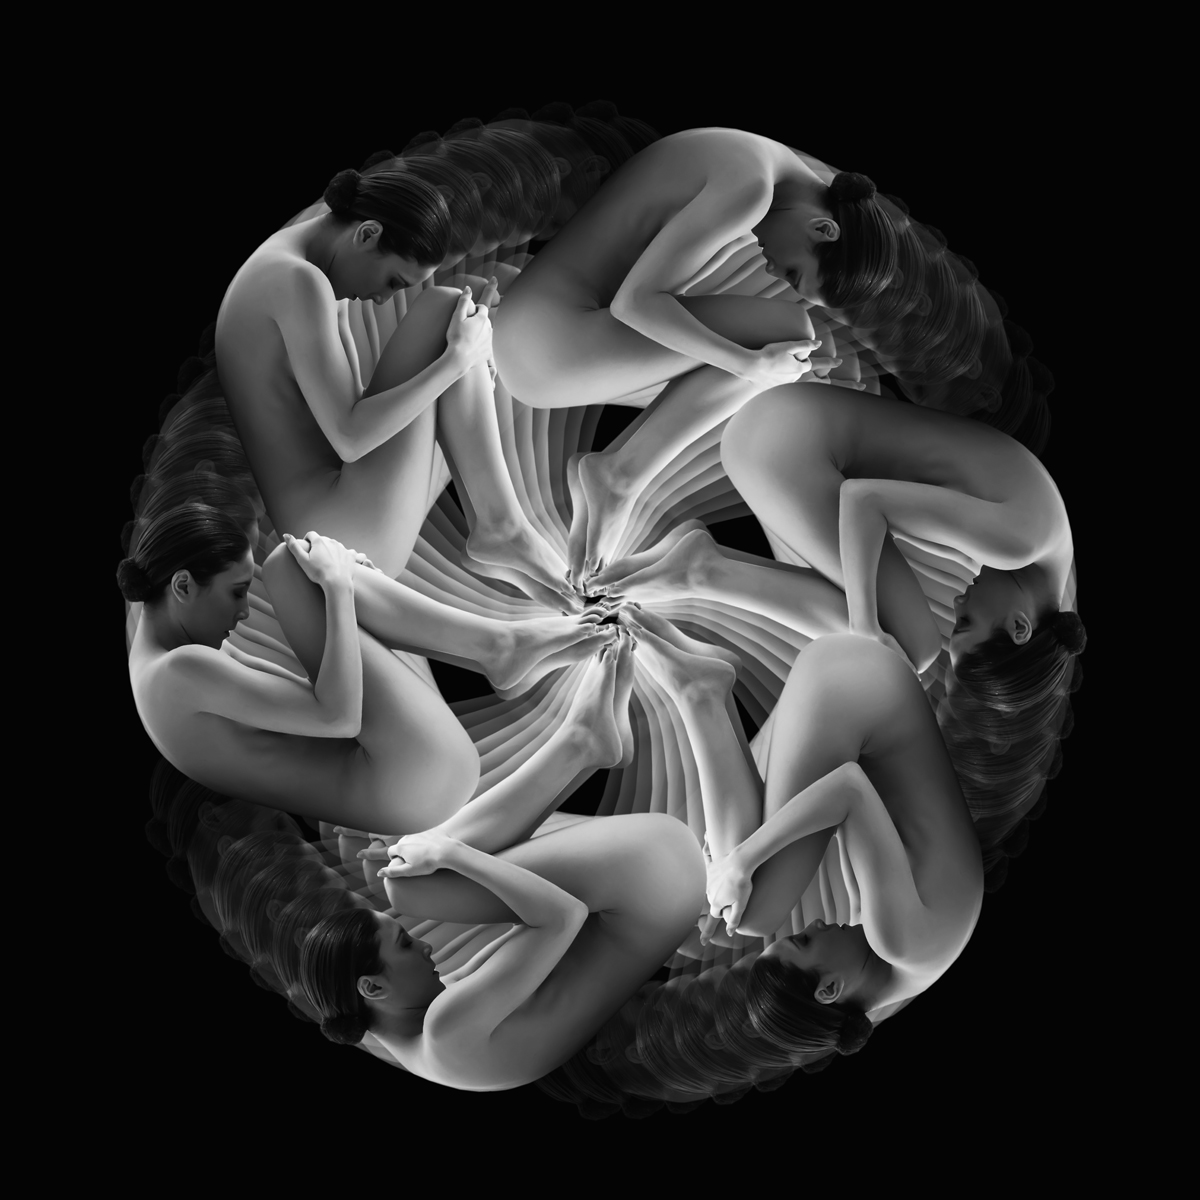 emel-karakozak-budding-nudes-abstract-photographer-17